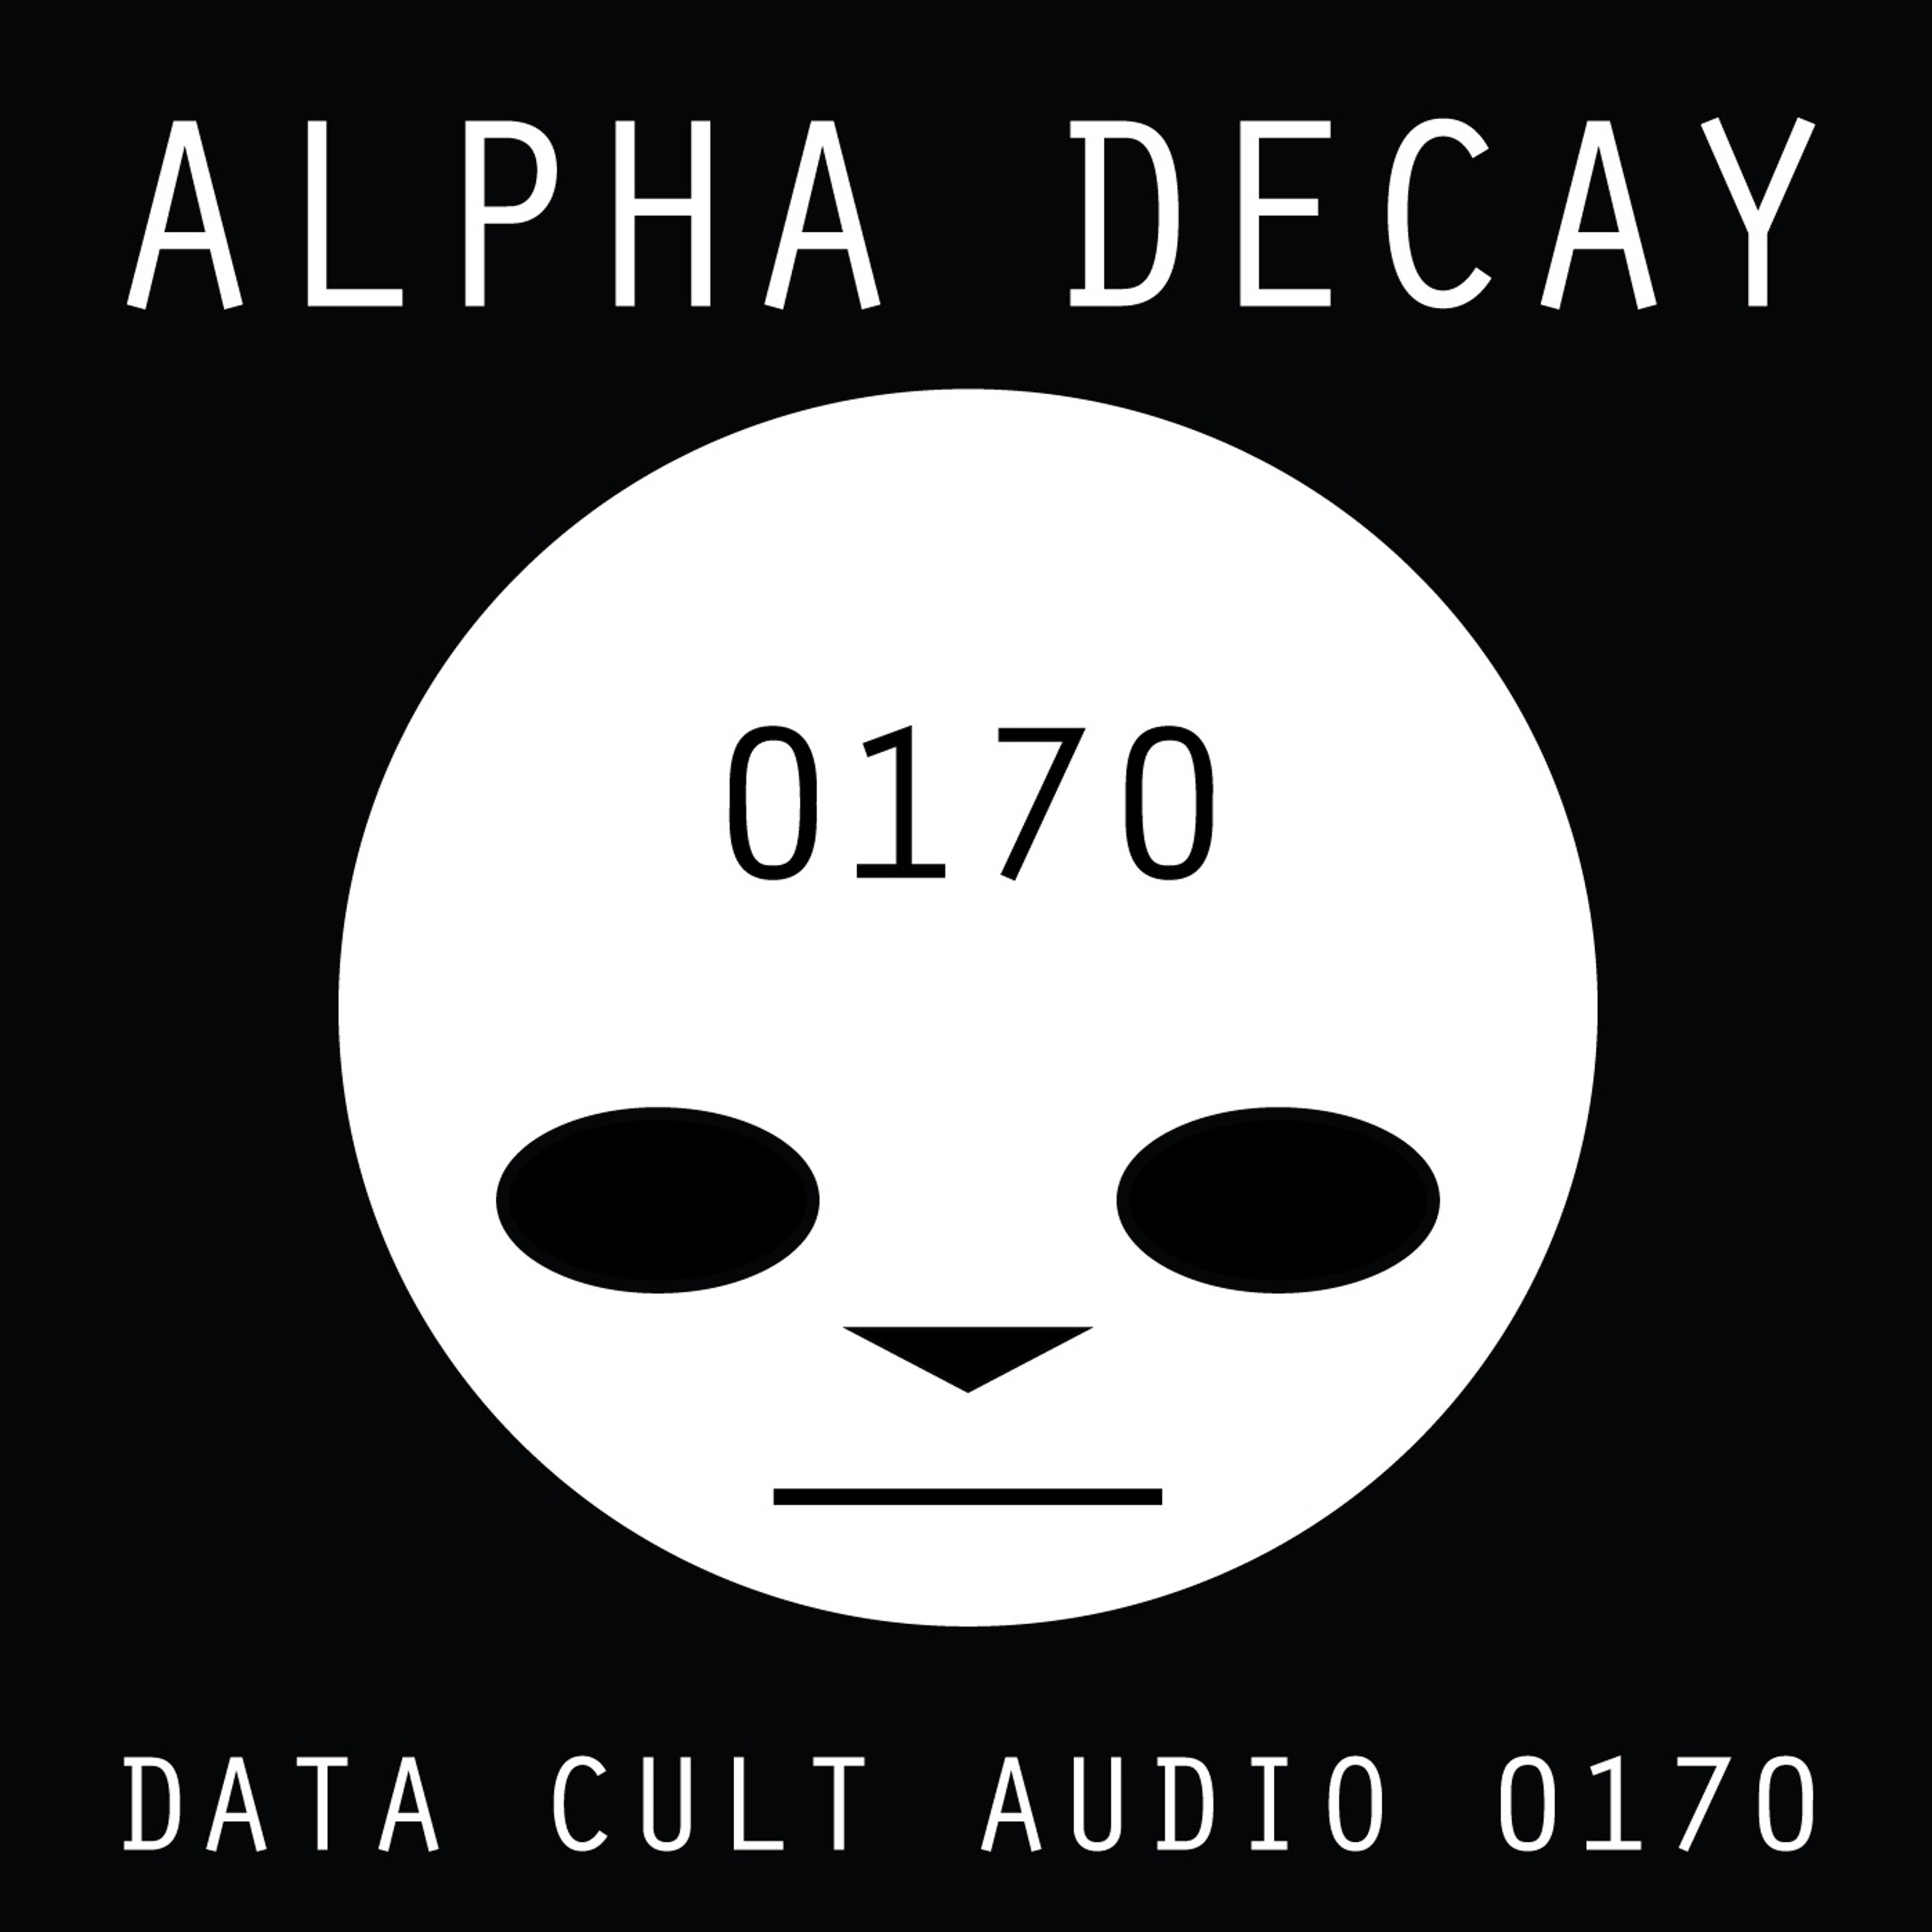 Data Cult Audio 0170 - Alpha Decay